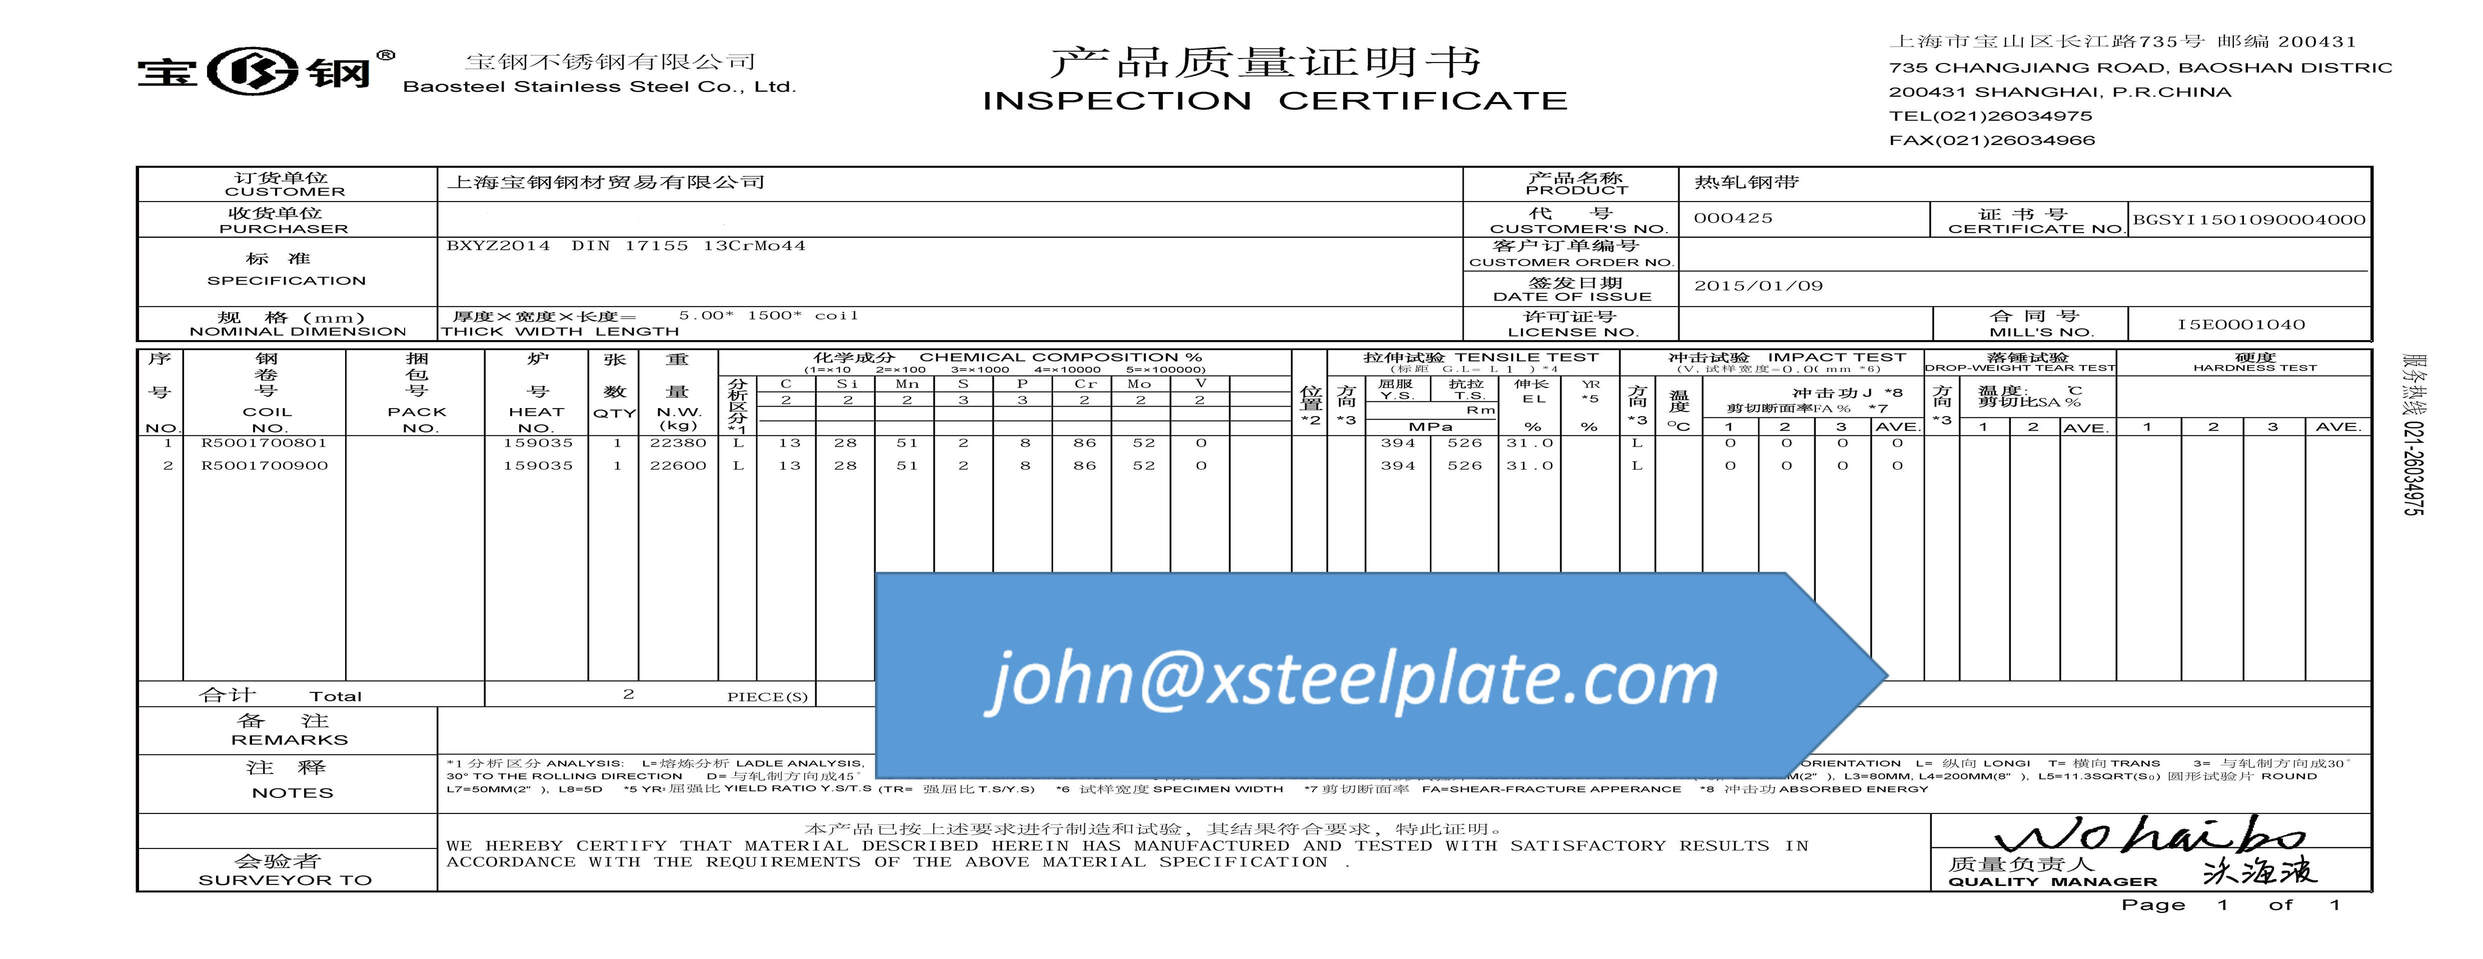 13CrMo44 steel plate mill certificate